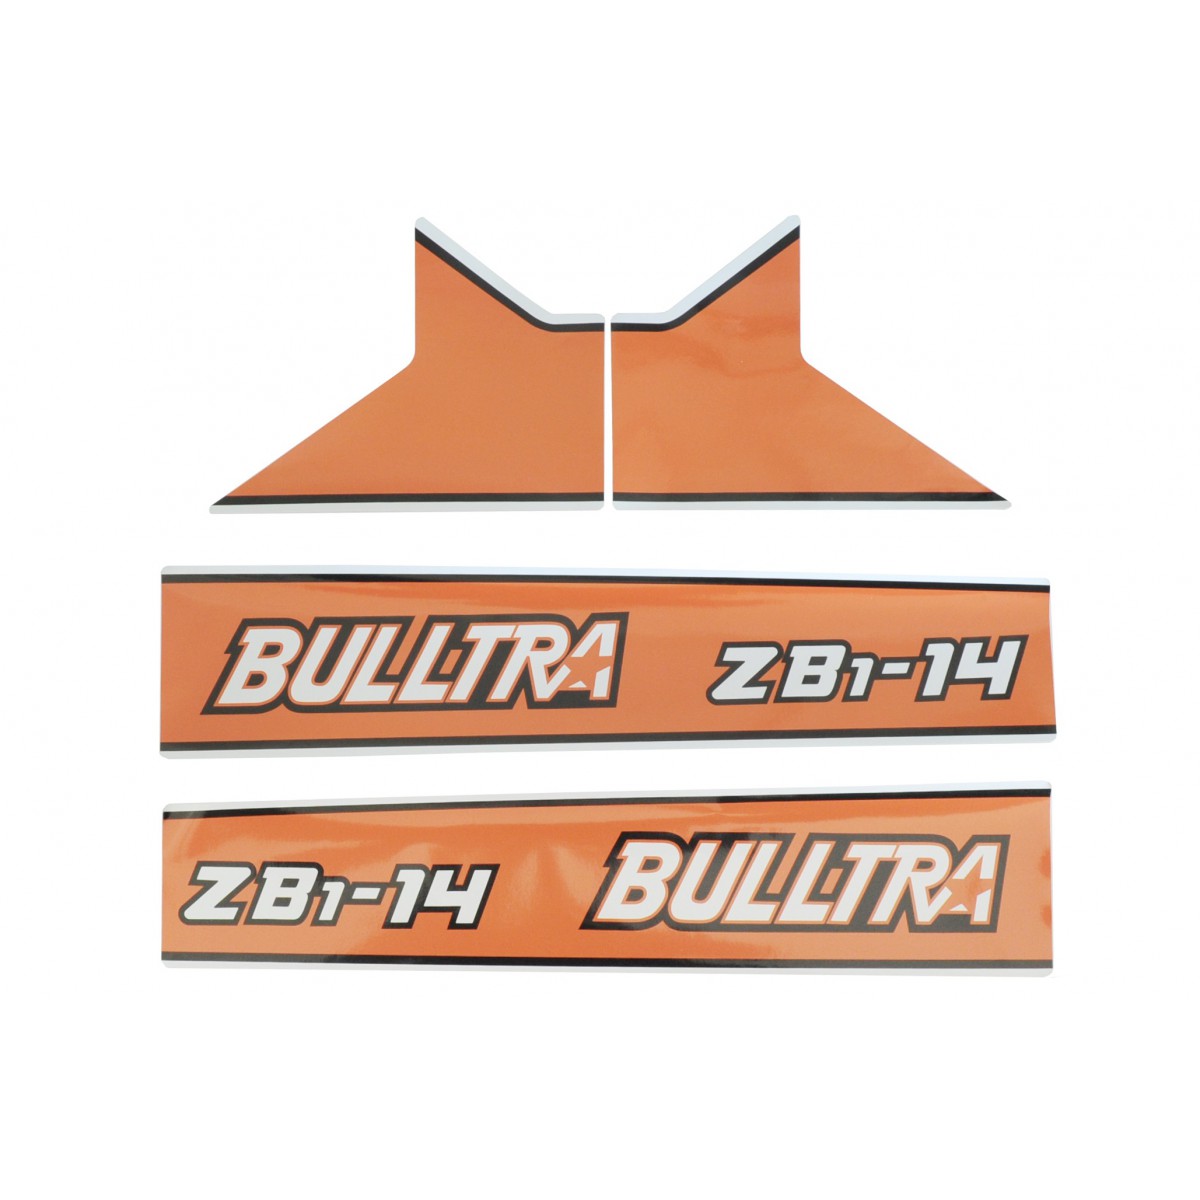 Pegatinas Kubota Bulltra B1-14, ZB1-14